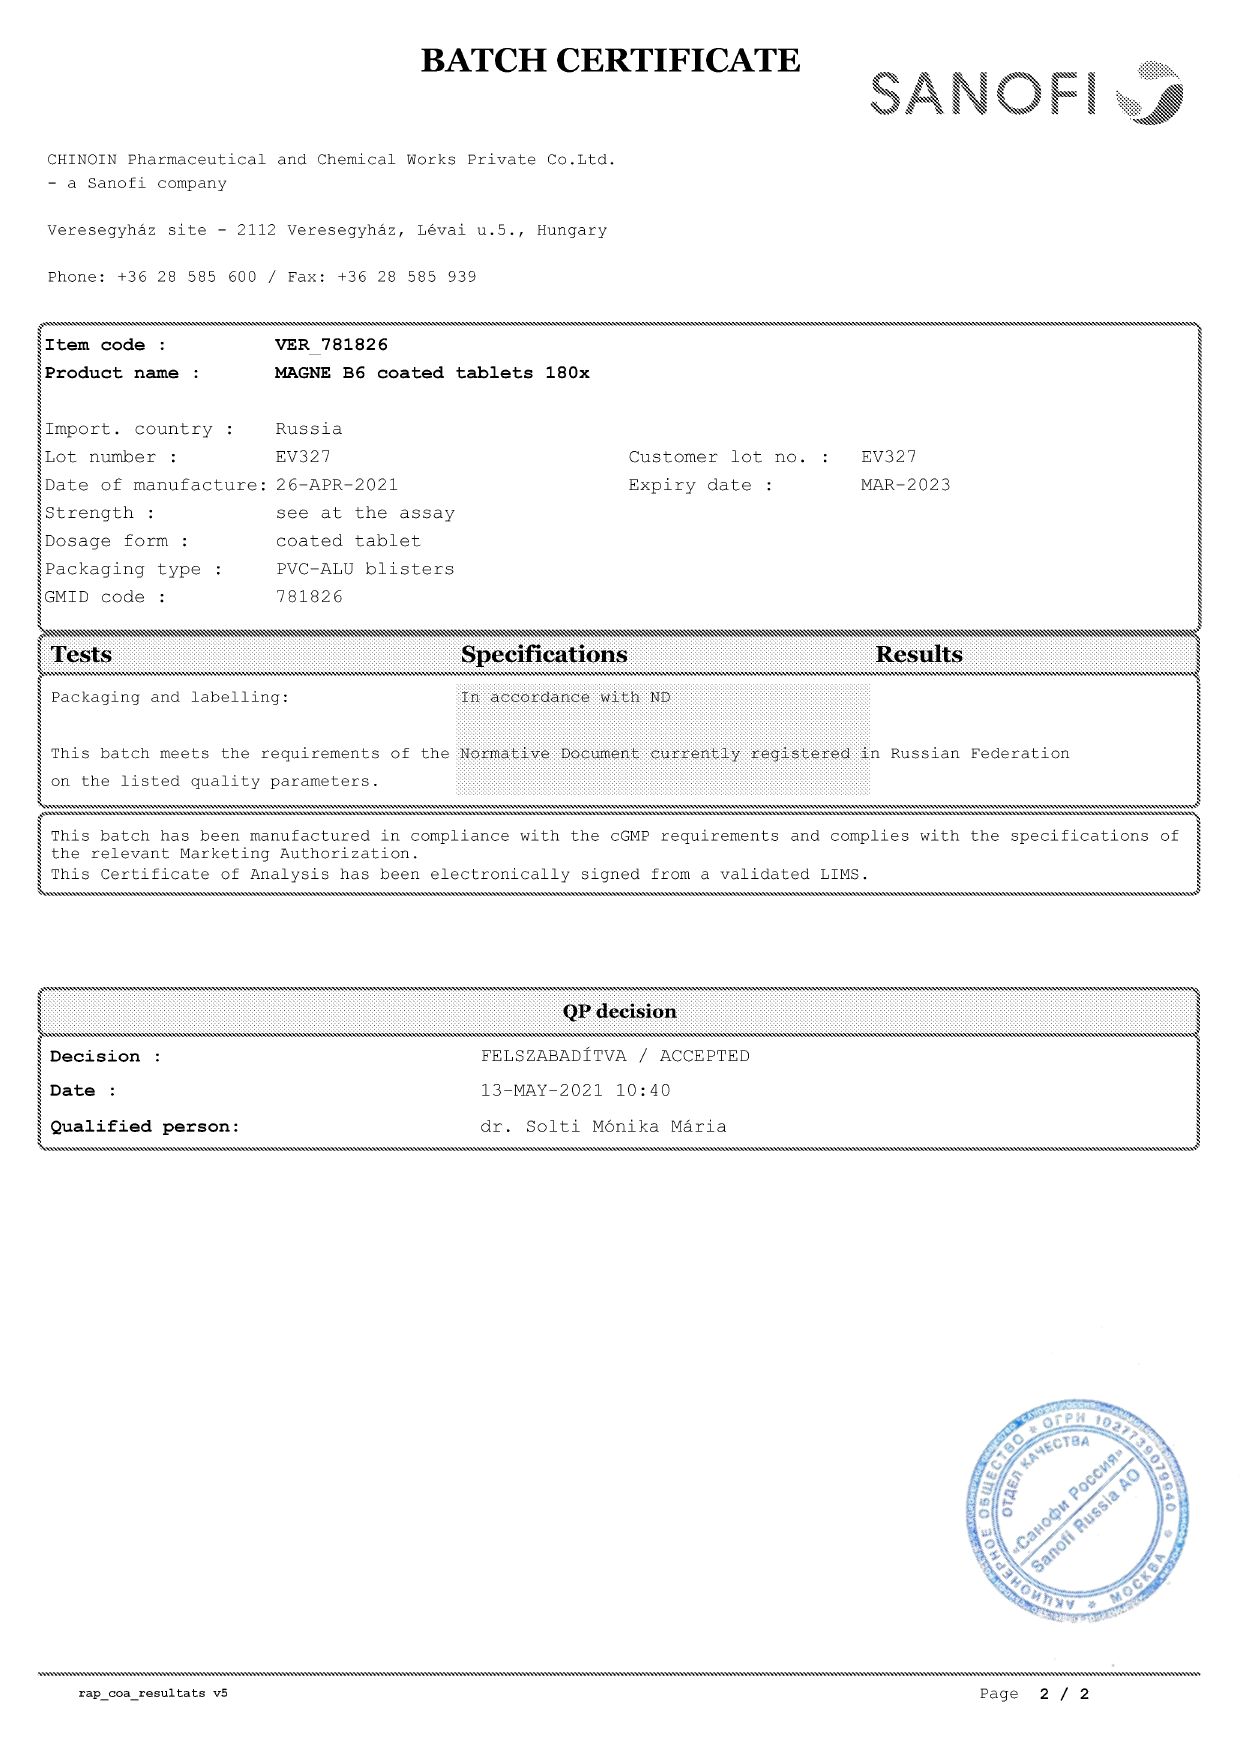 Магне B6 сертификат